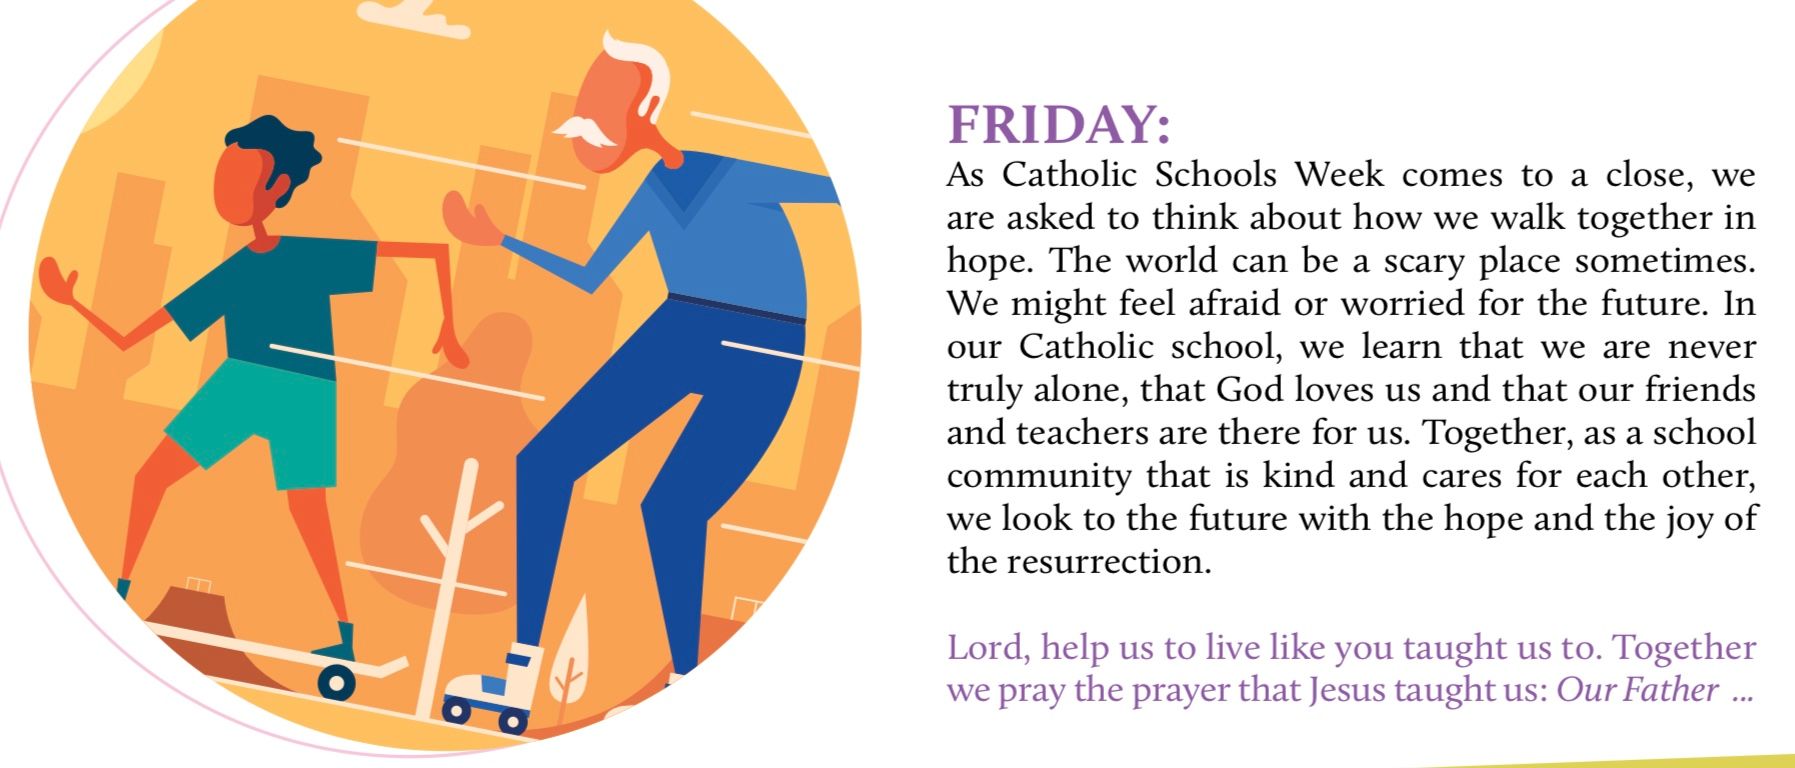 Catholic Schools Week - Friday